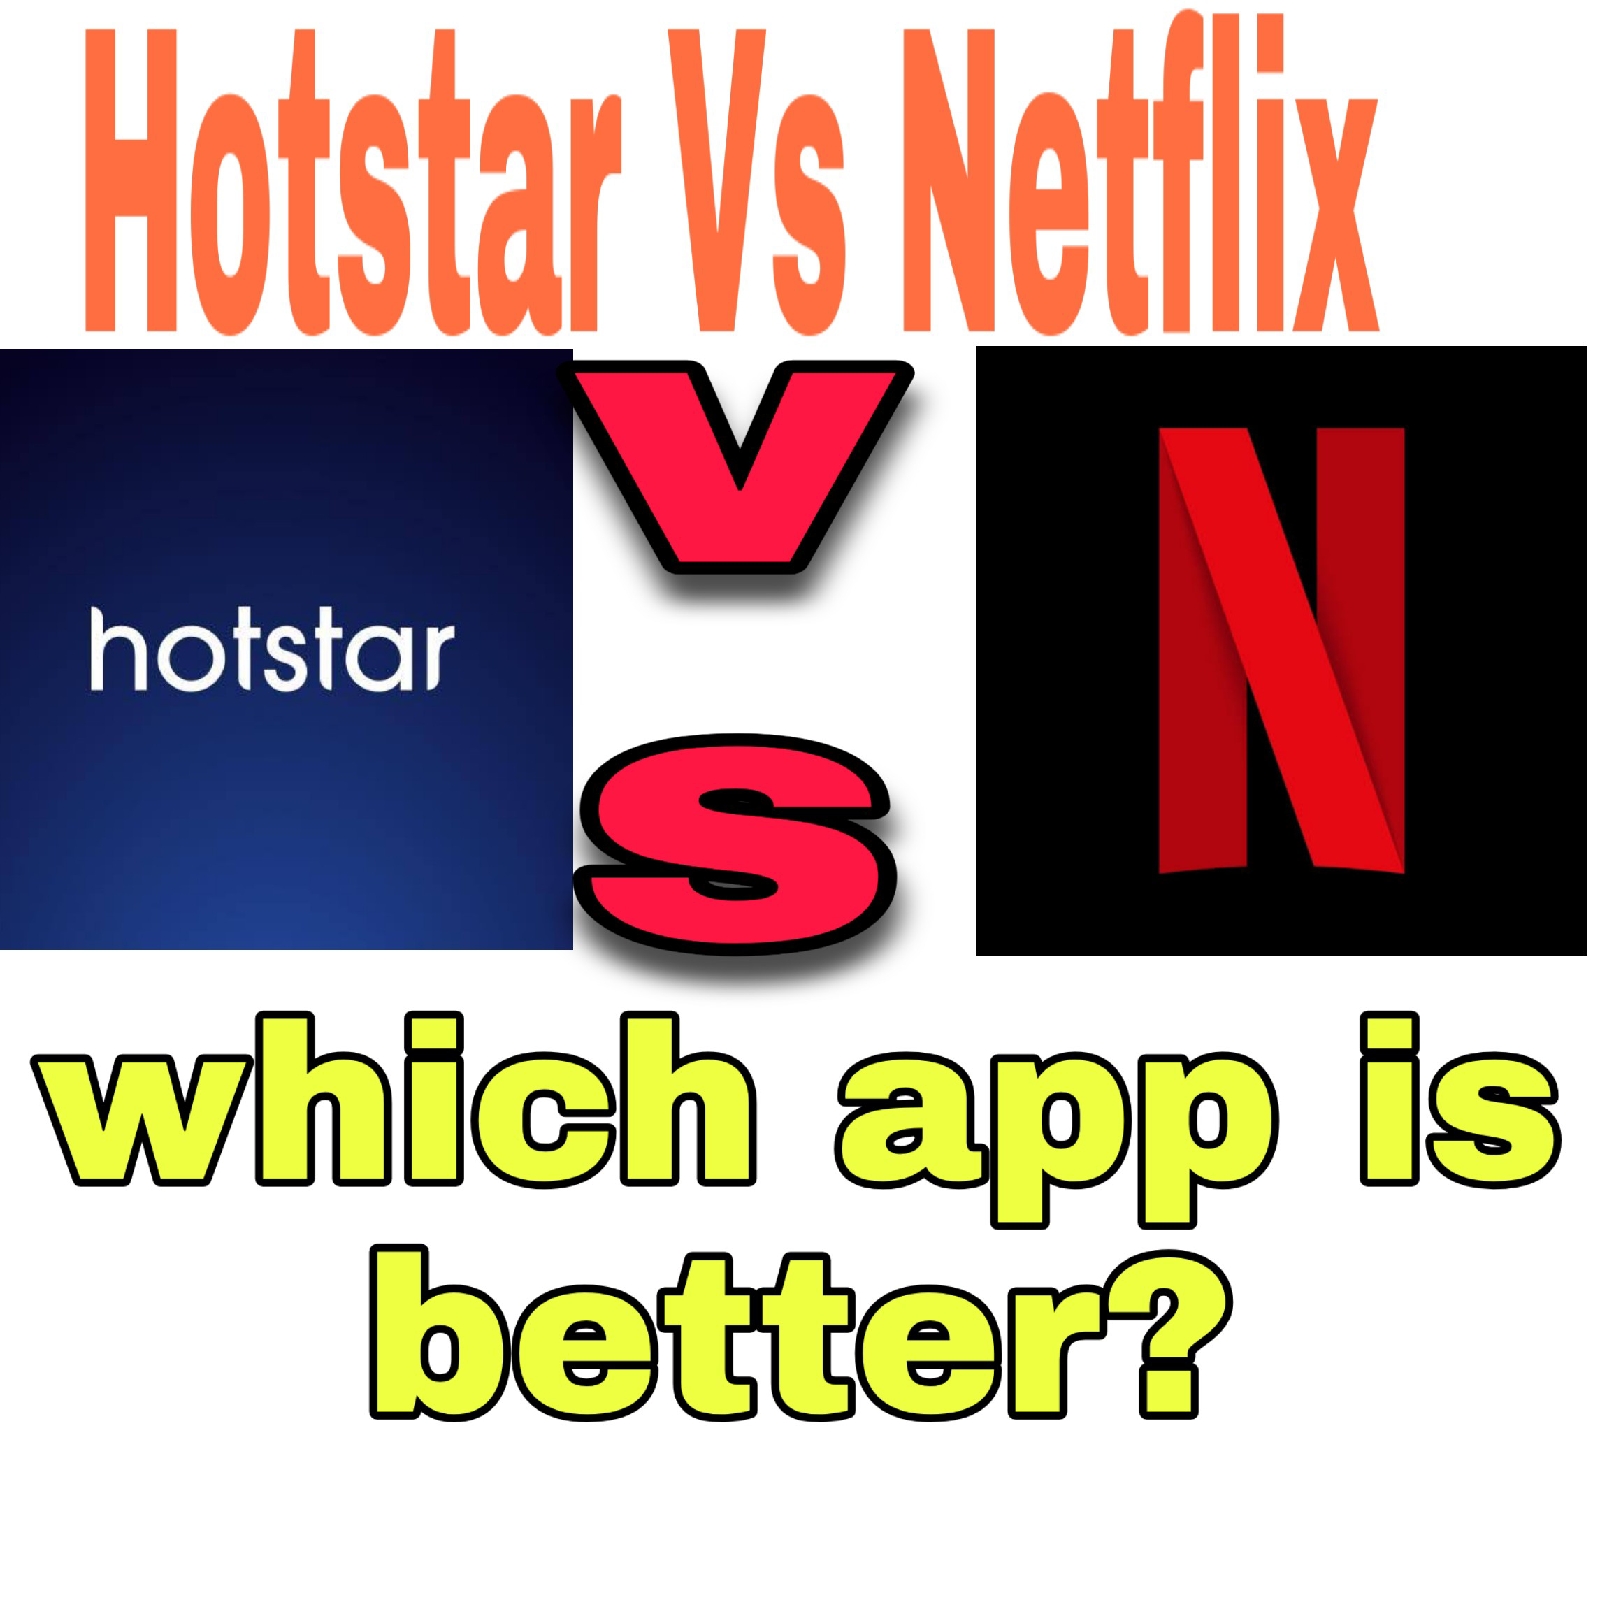 Disney Plus Hotstar Vs Netflix My Opinion